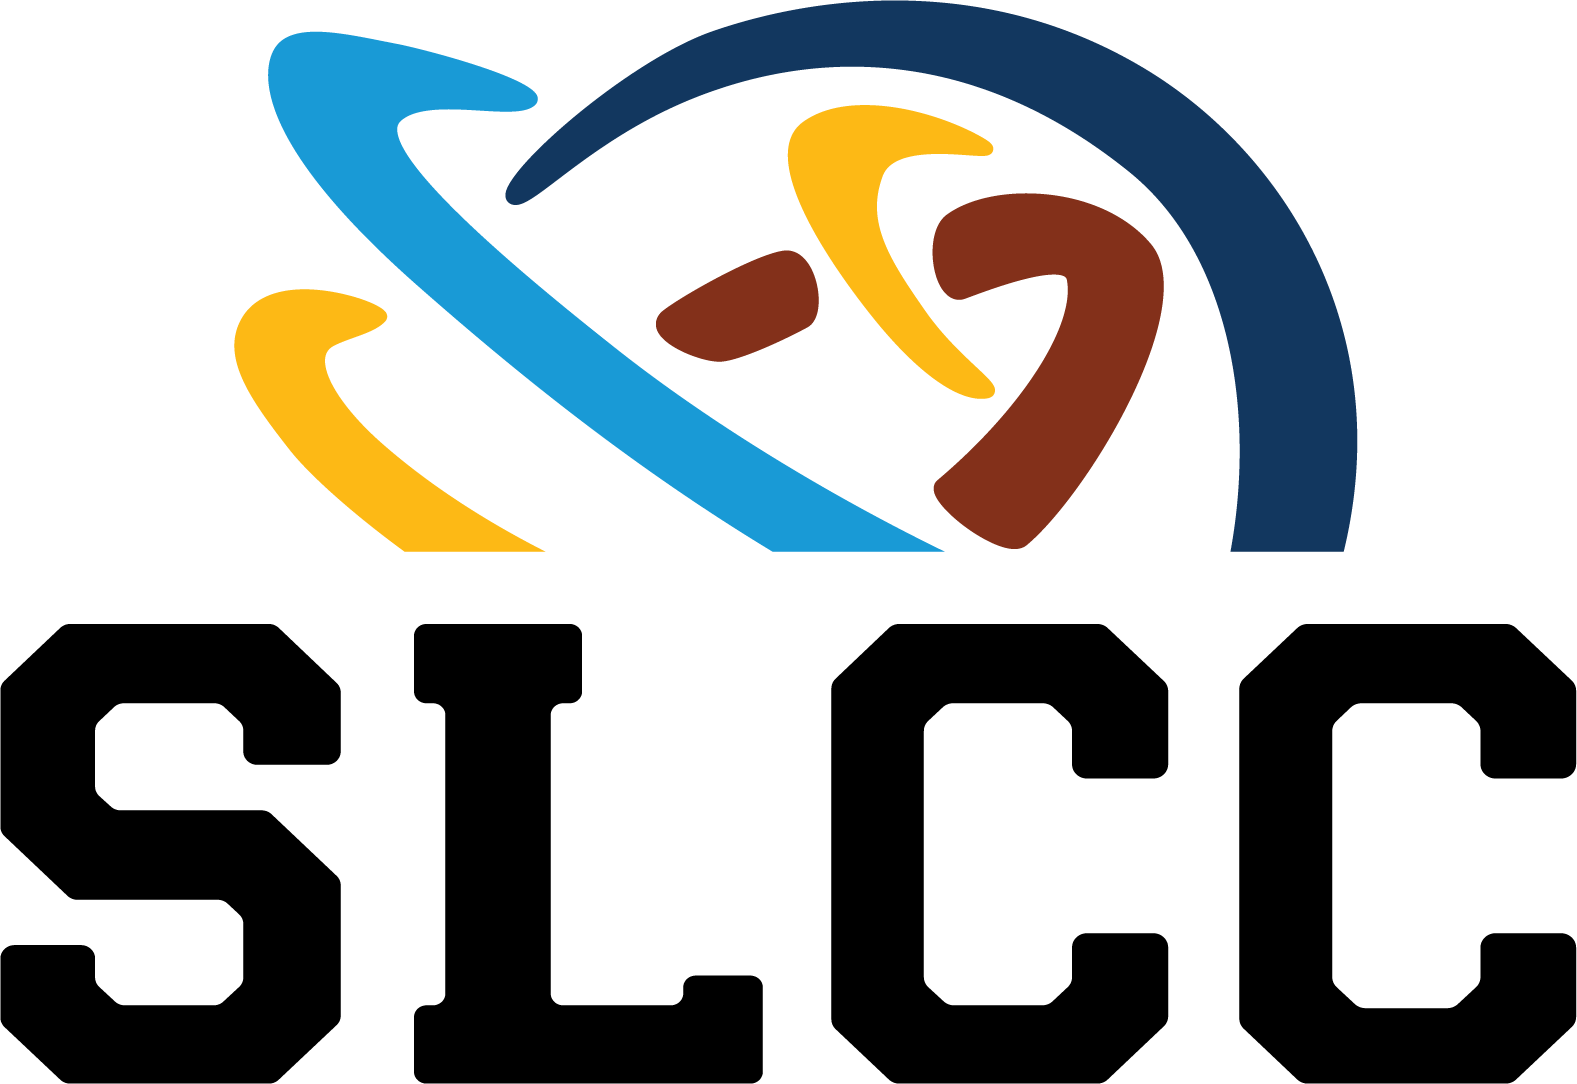 SLCC Logo - College Symbols | SLCC